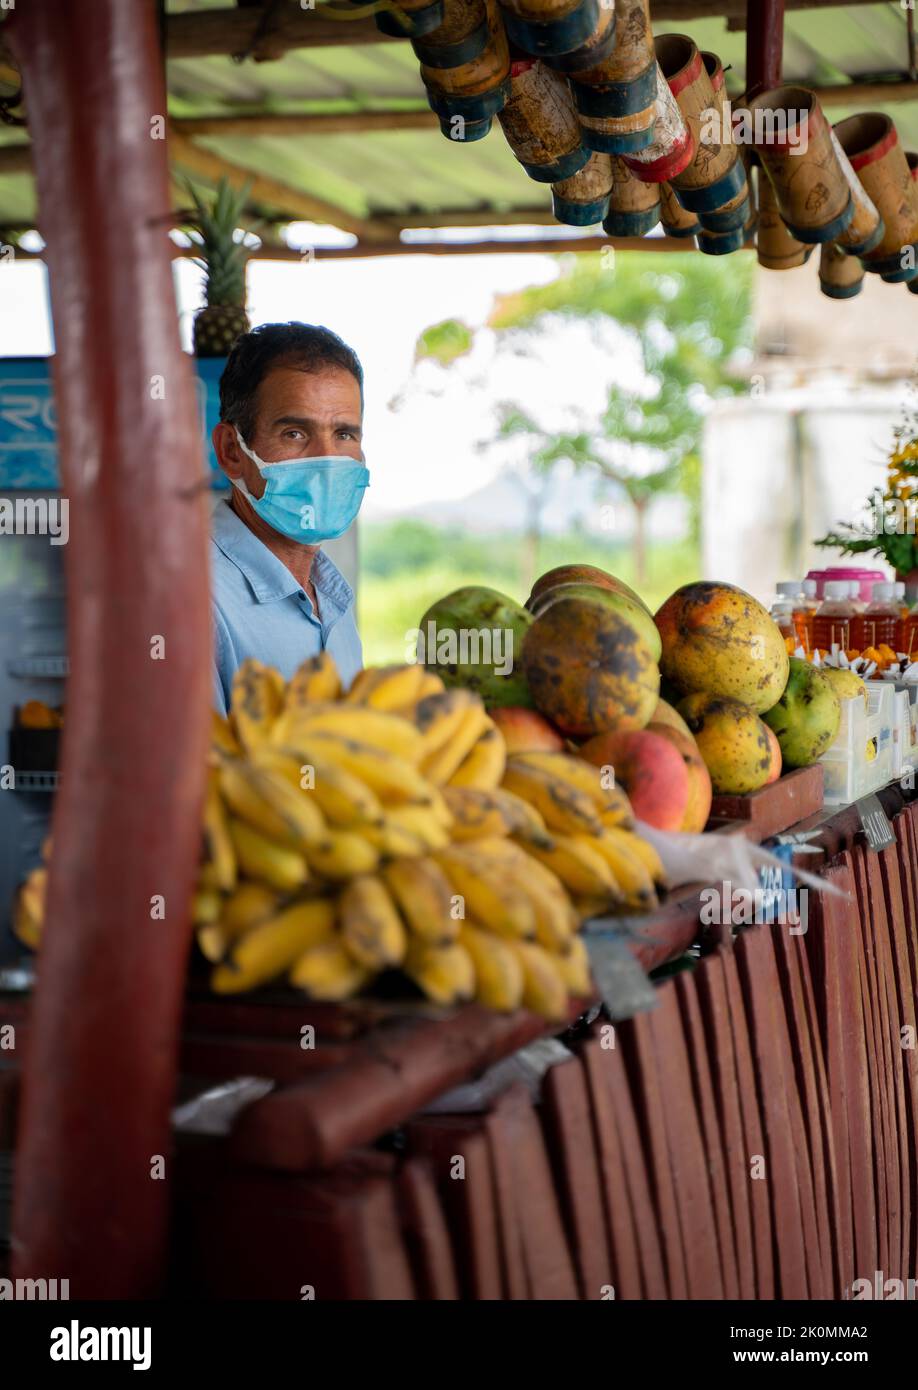 Veradero, Cuba - July 23 2022: Cuban man selling fruit at a food stand in Veradero, Cuba. Banana and mangos for sale at a roadside shop. Stock Photo